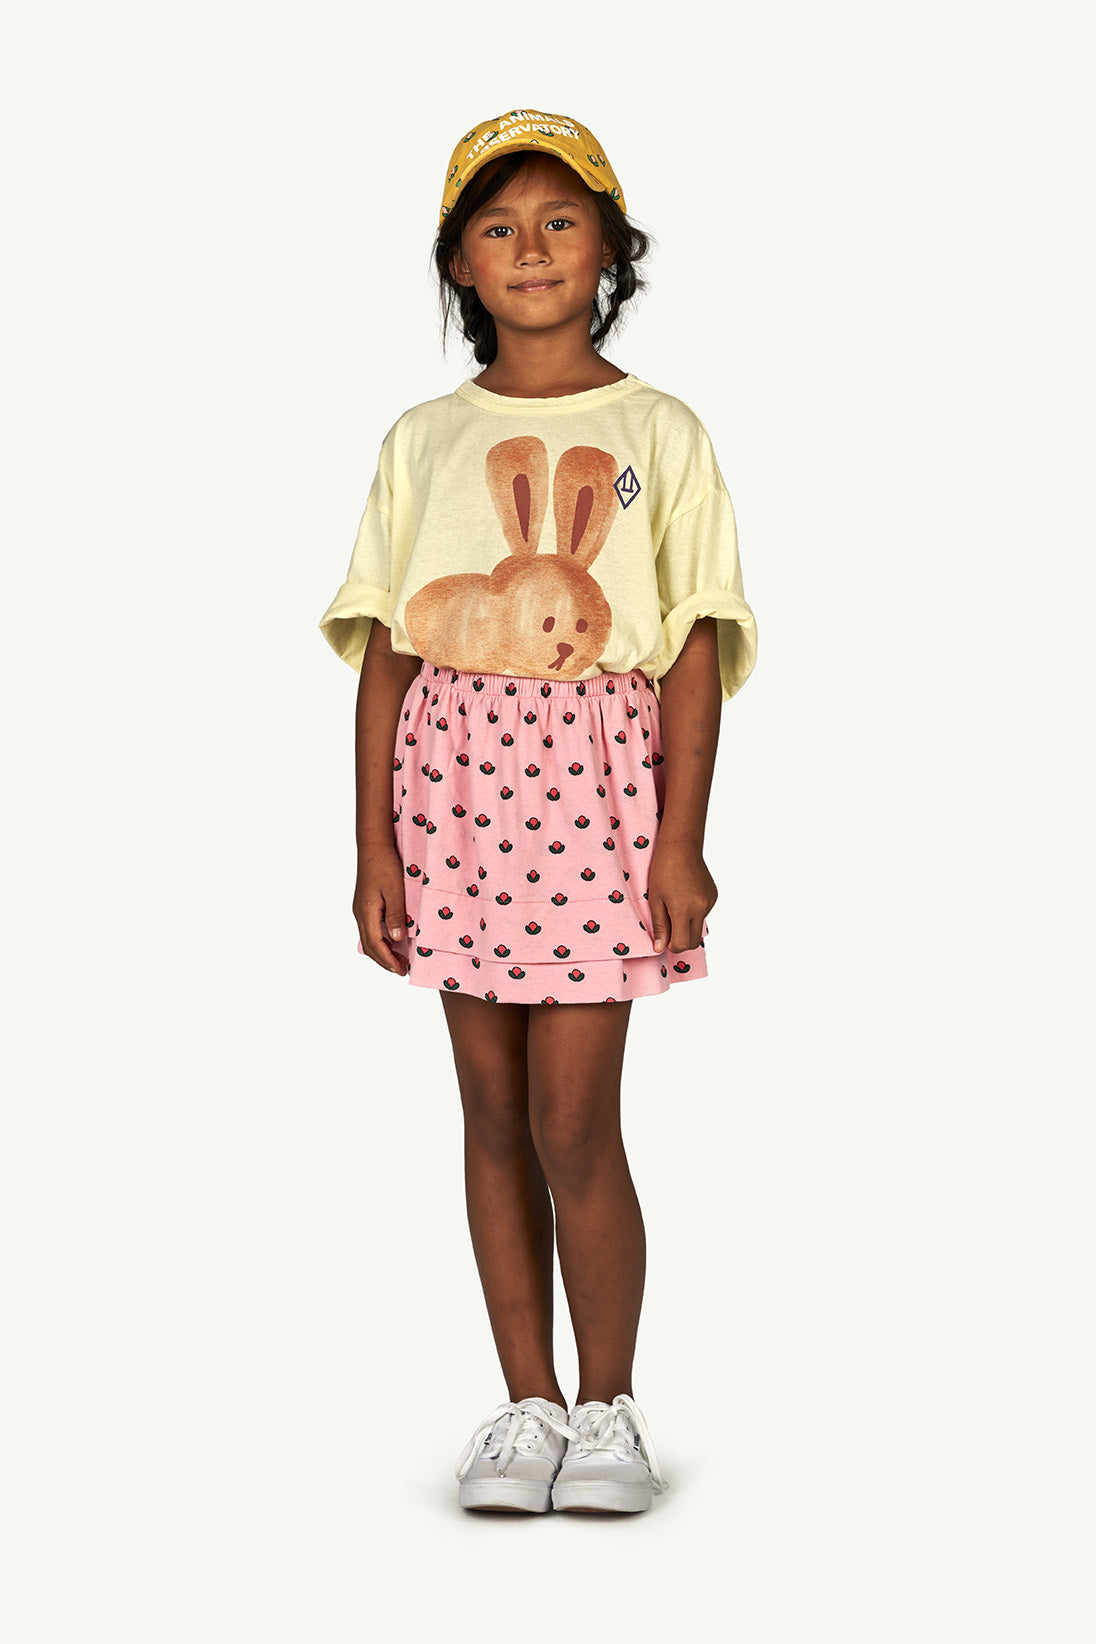 Boys & Girls Yellow Rabbit Printed Cotton T-Shirt